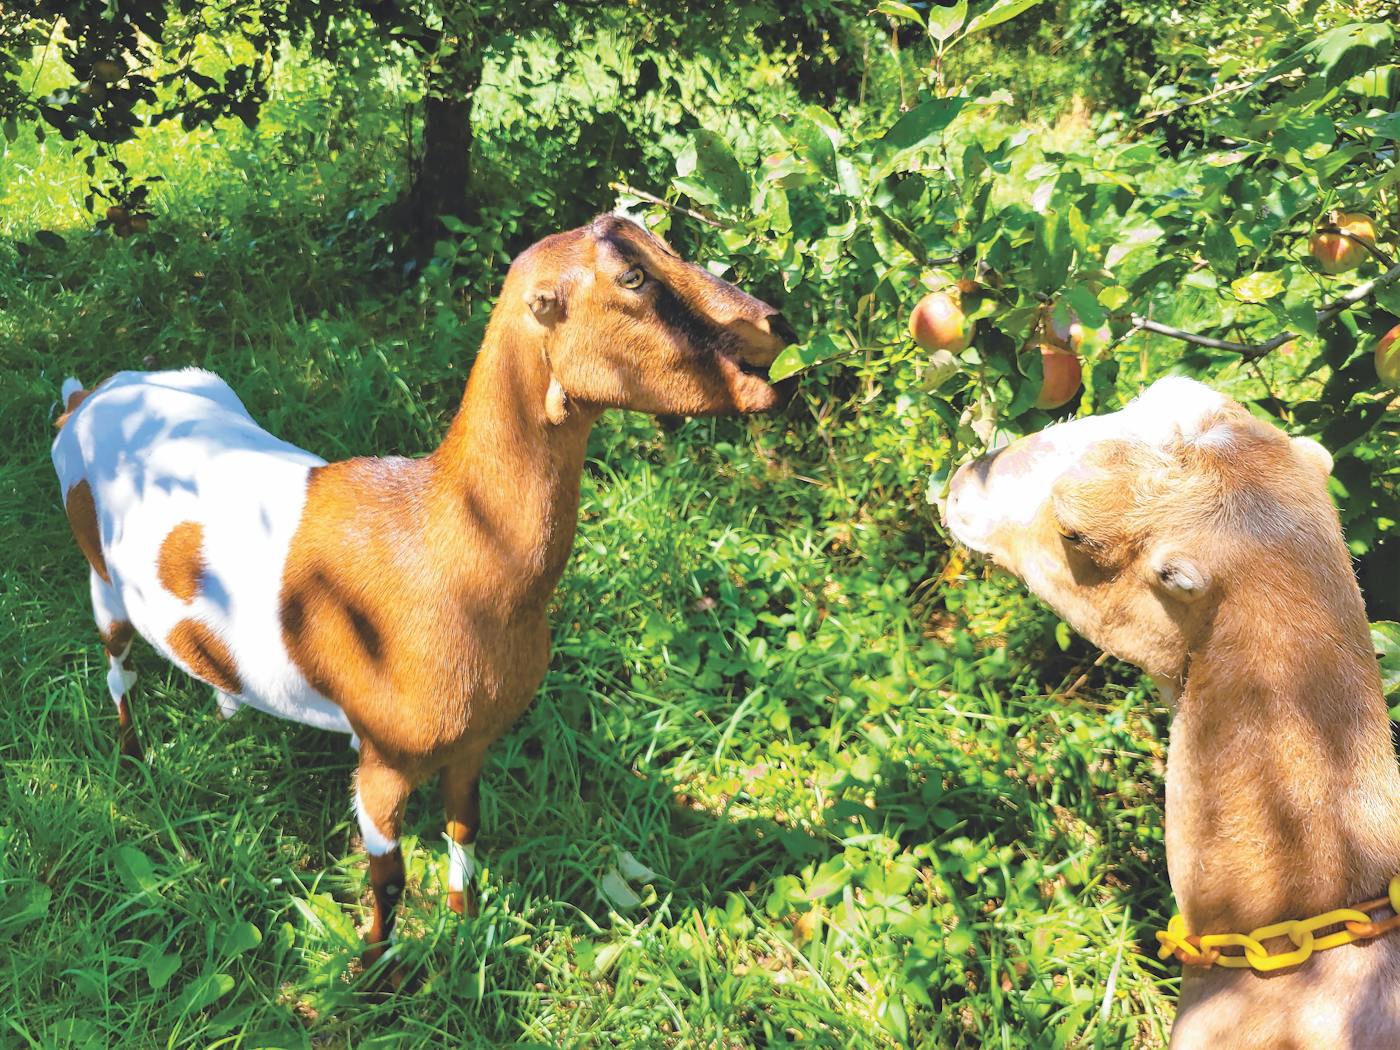 Goats at Evergreen Lane Farm & Creamery in Fennville, Michigan (photo courtesy of Evergreen Lane Farm & Creamery))